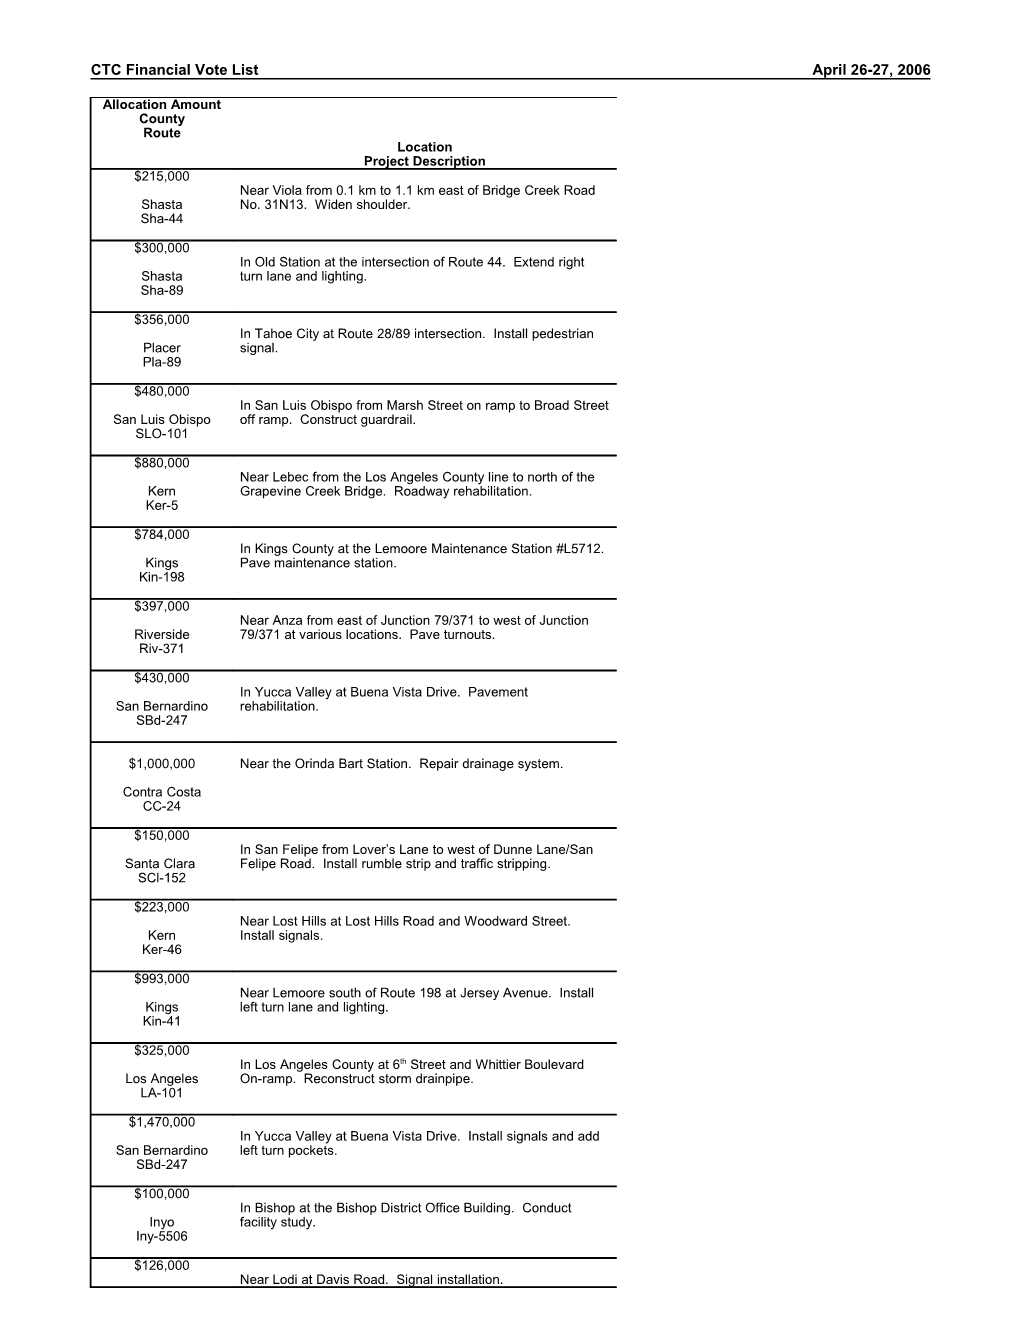 CTC Financial Vote List DRAFT April 26-27, 2006